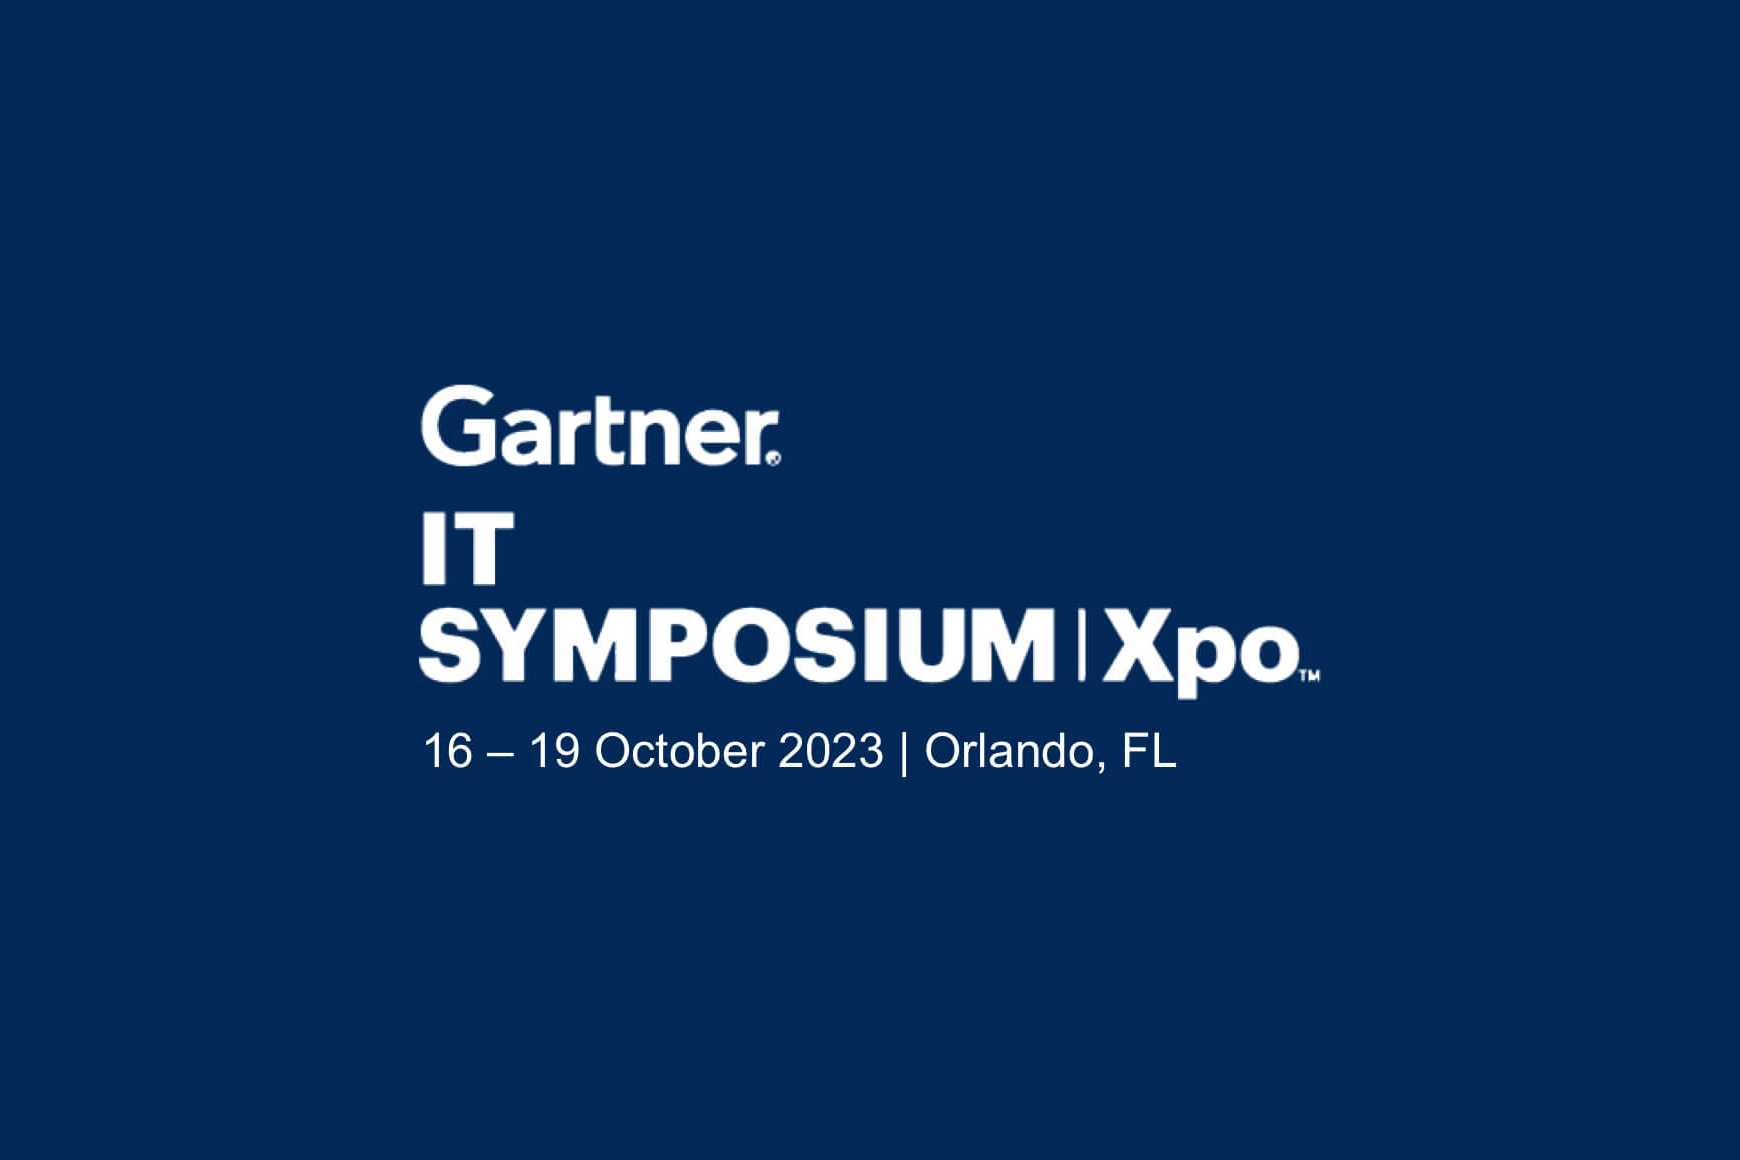 Gartner IT Symposium/Xpo™